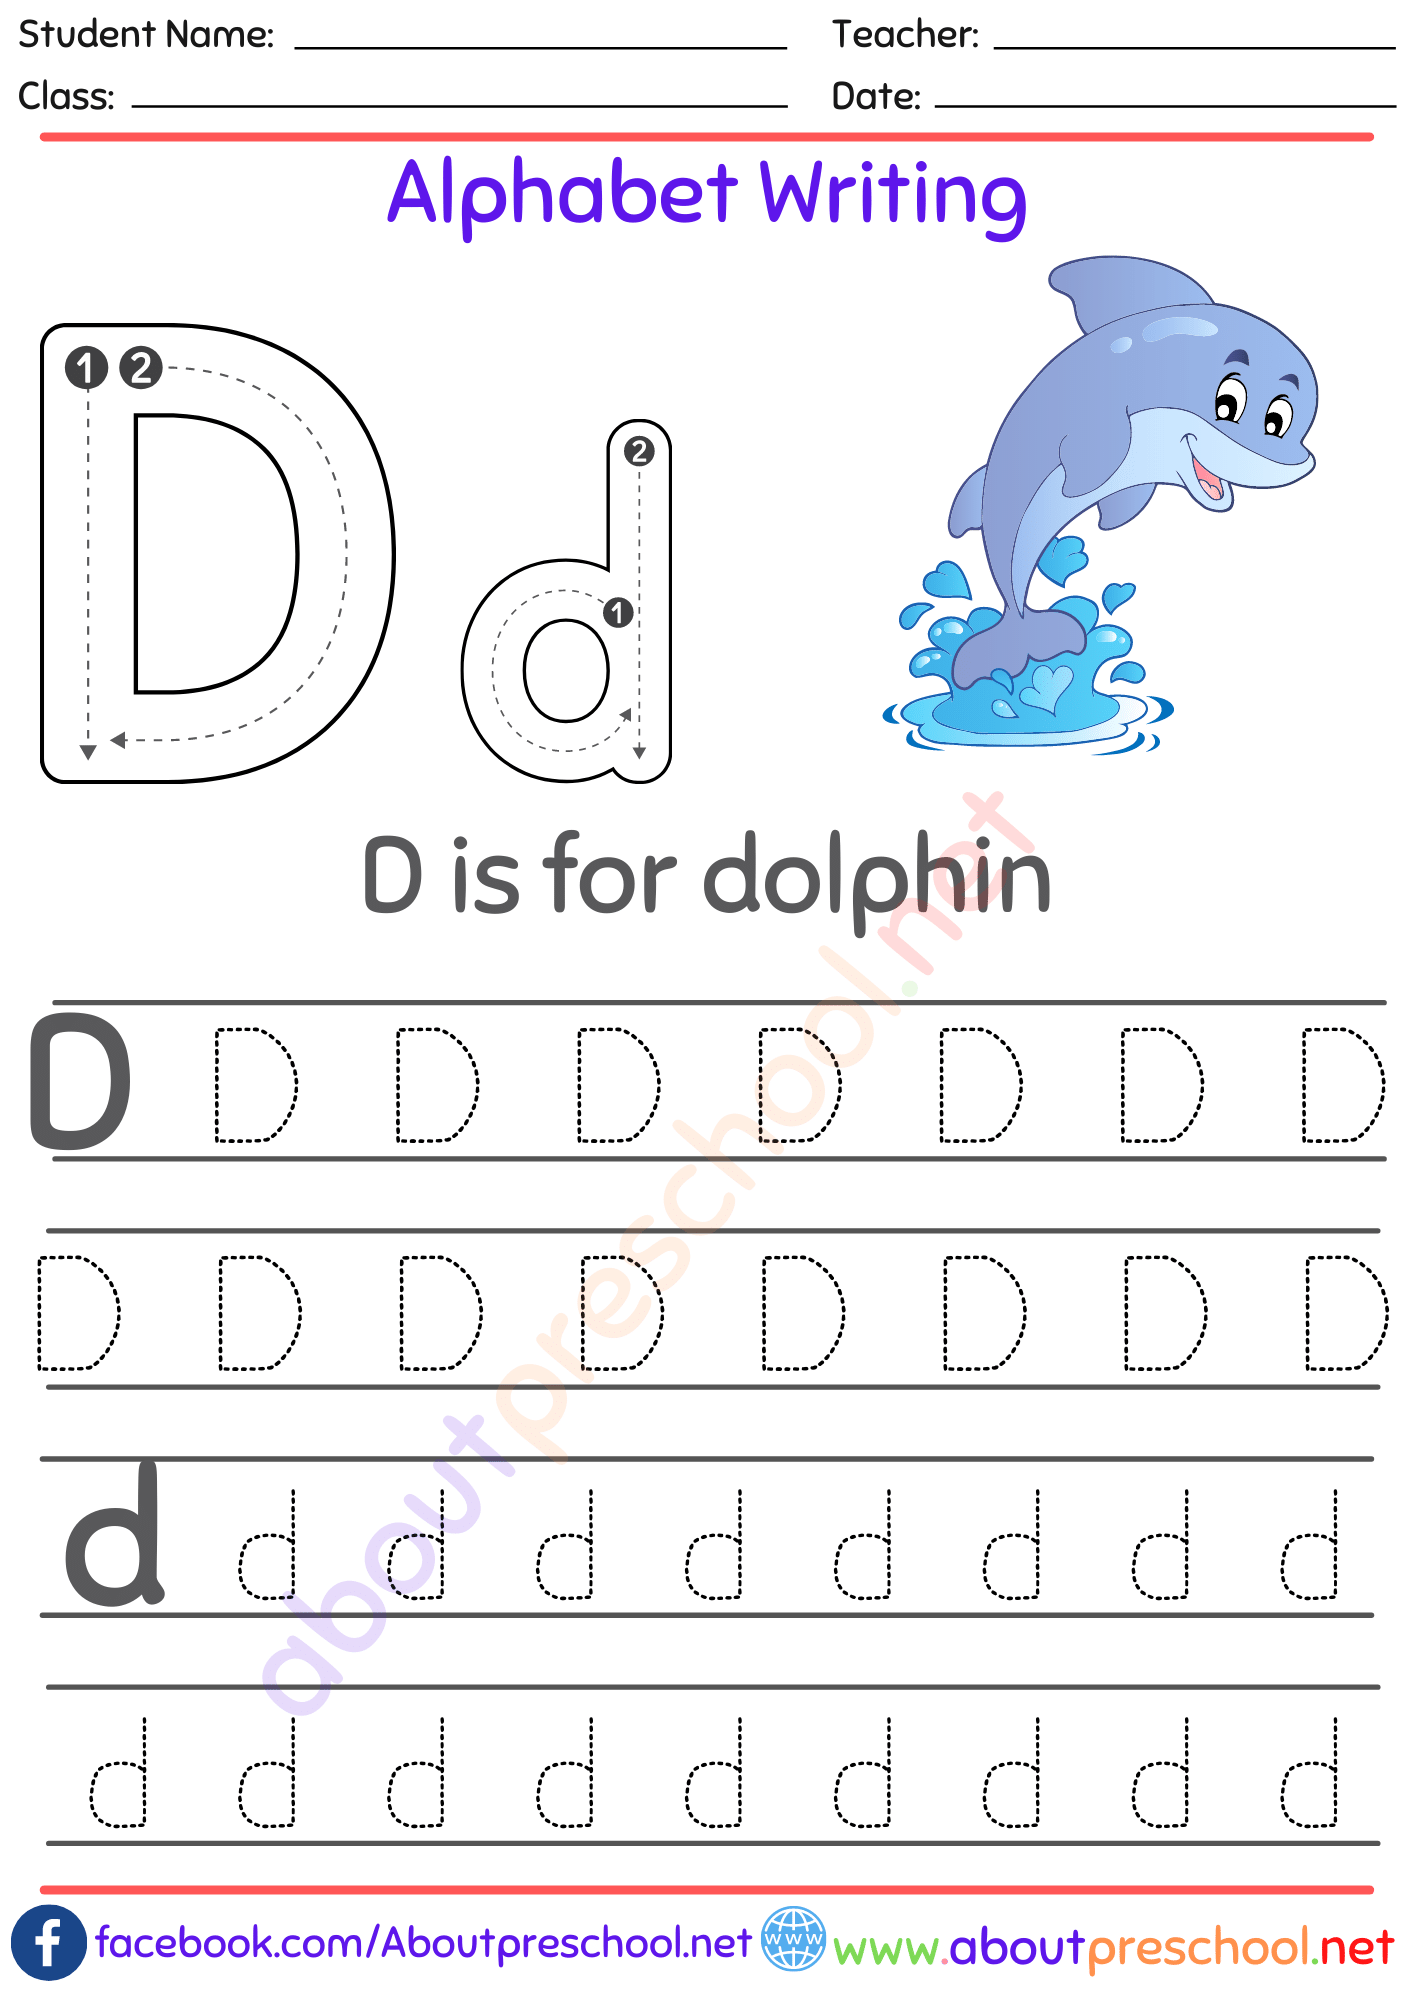 Alphabet Writing Worksheet d